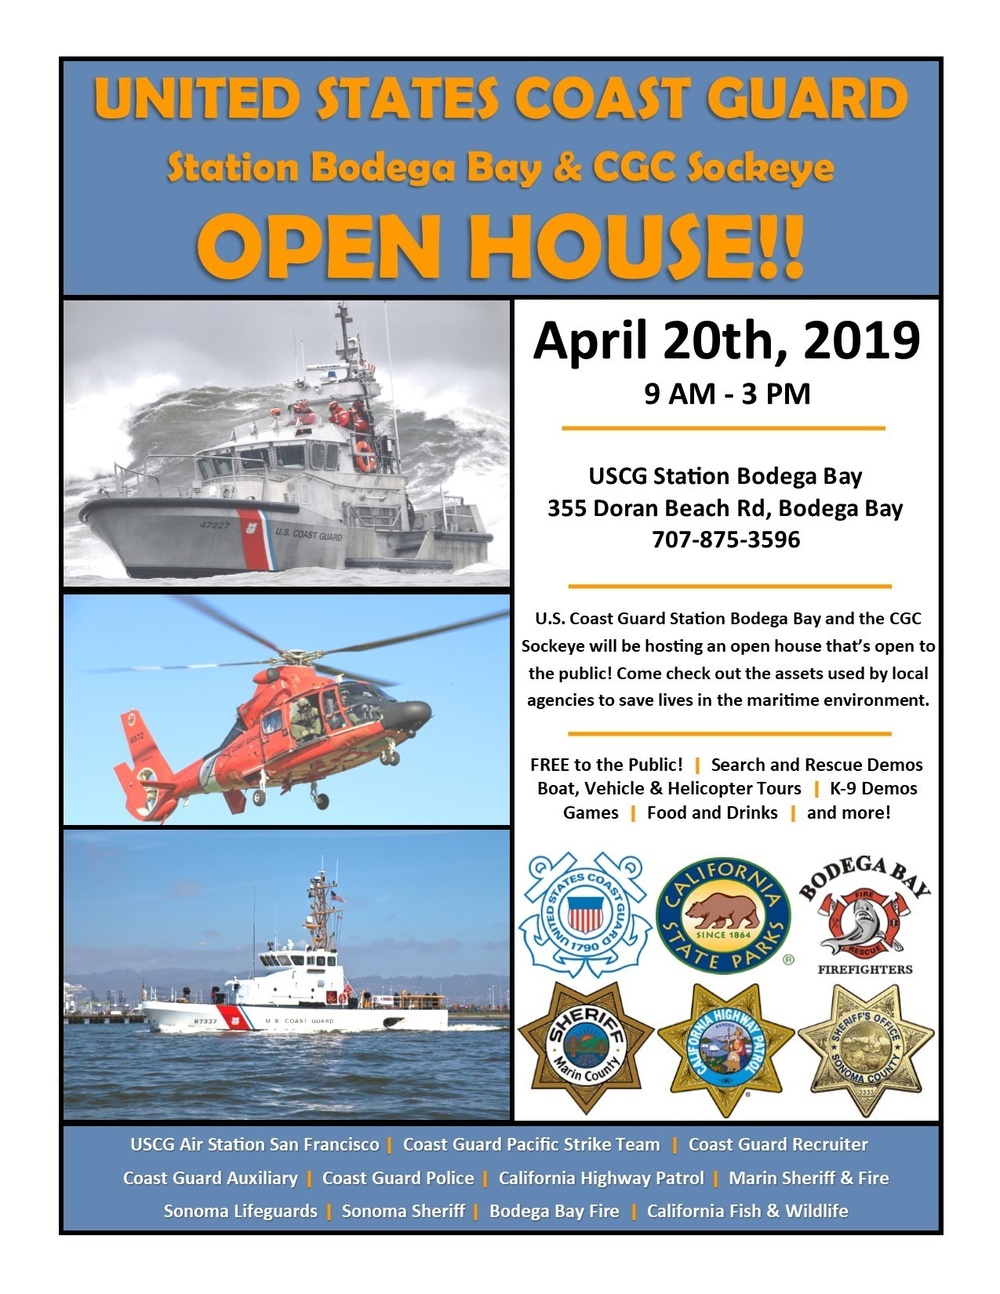 Coast Guard Station Bodega Bay to host open house